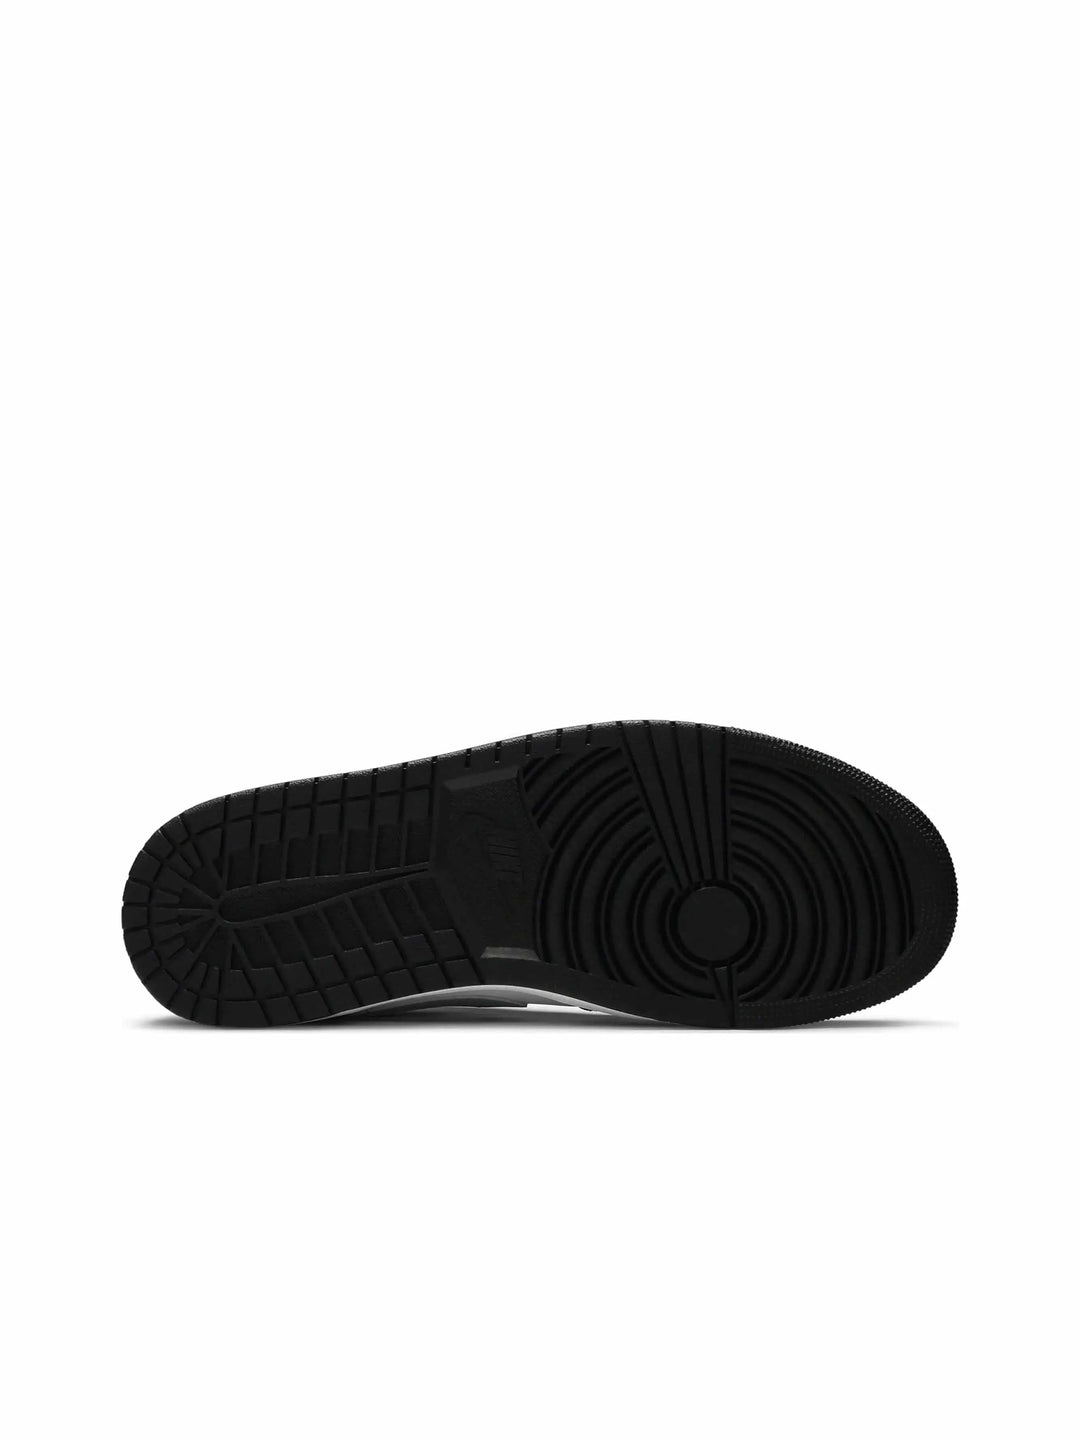 Nike Air Jordan 1 Low Black White Grey - Prior